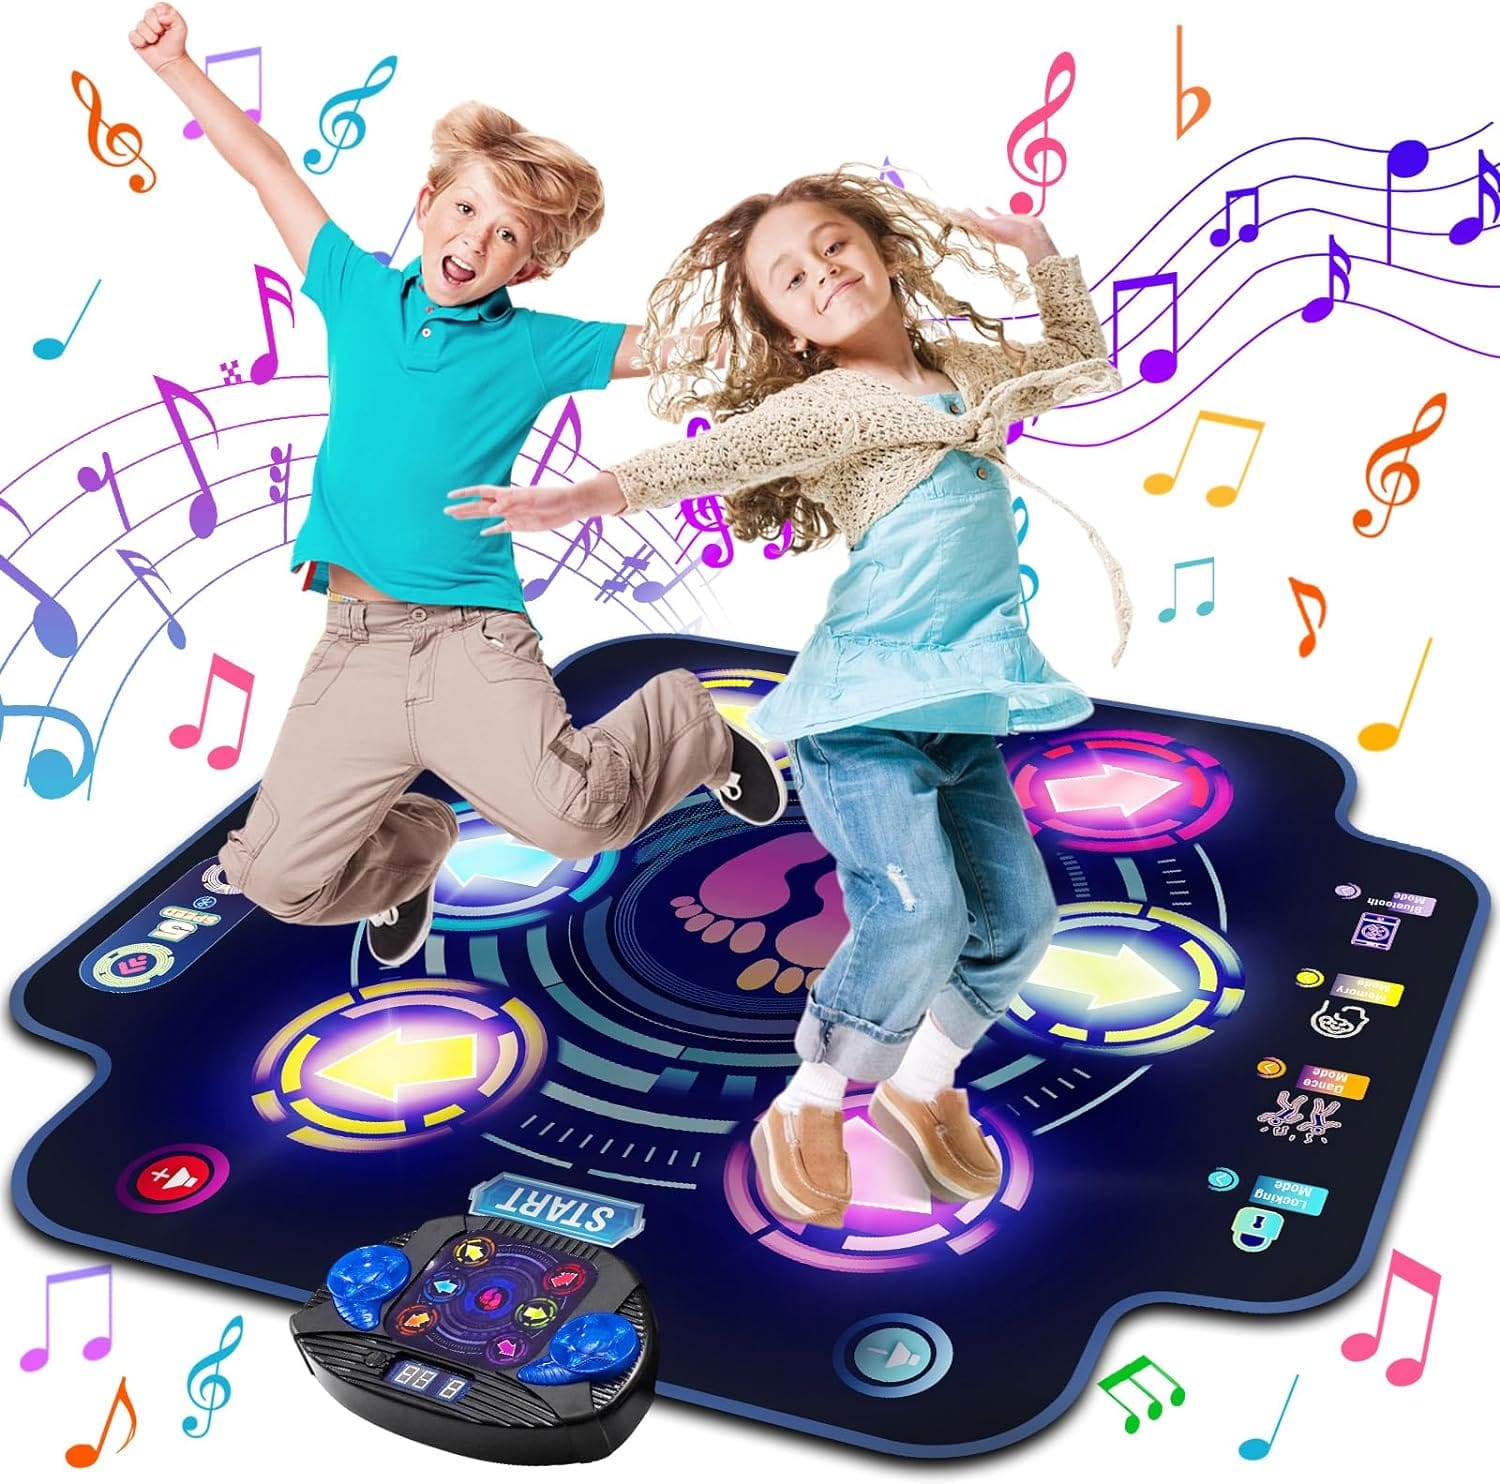 Dance Mat for Kids Review